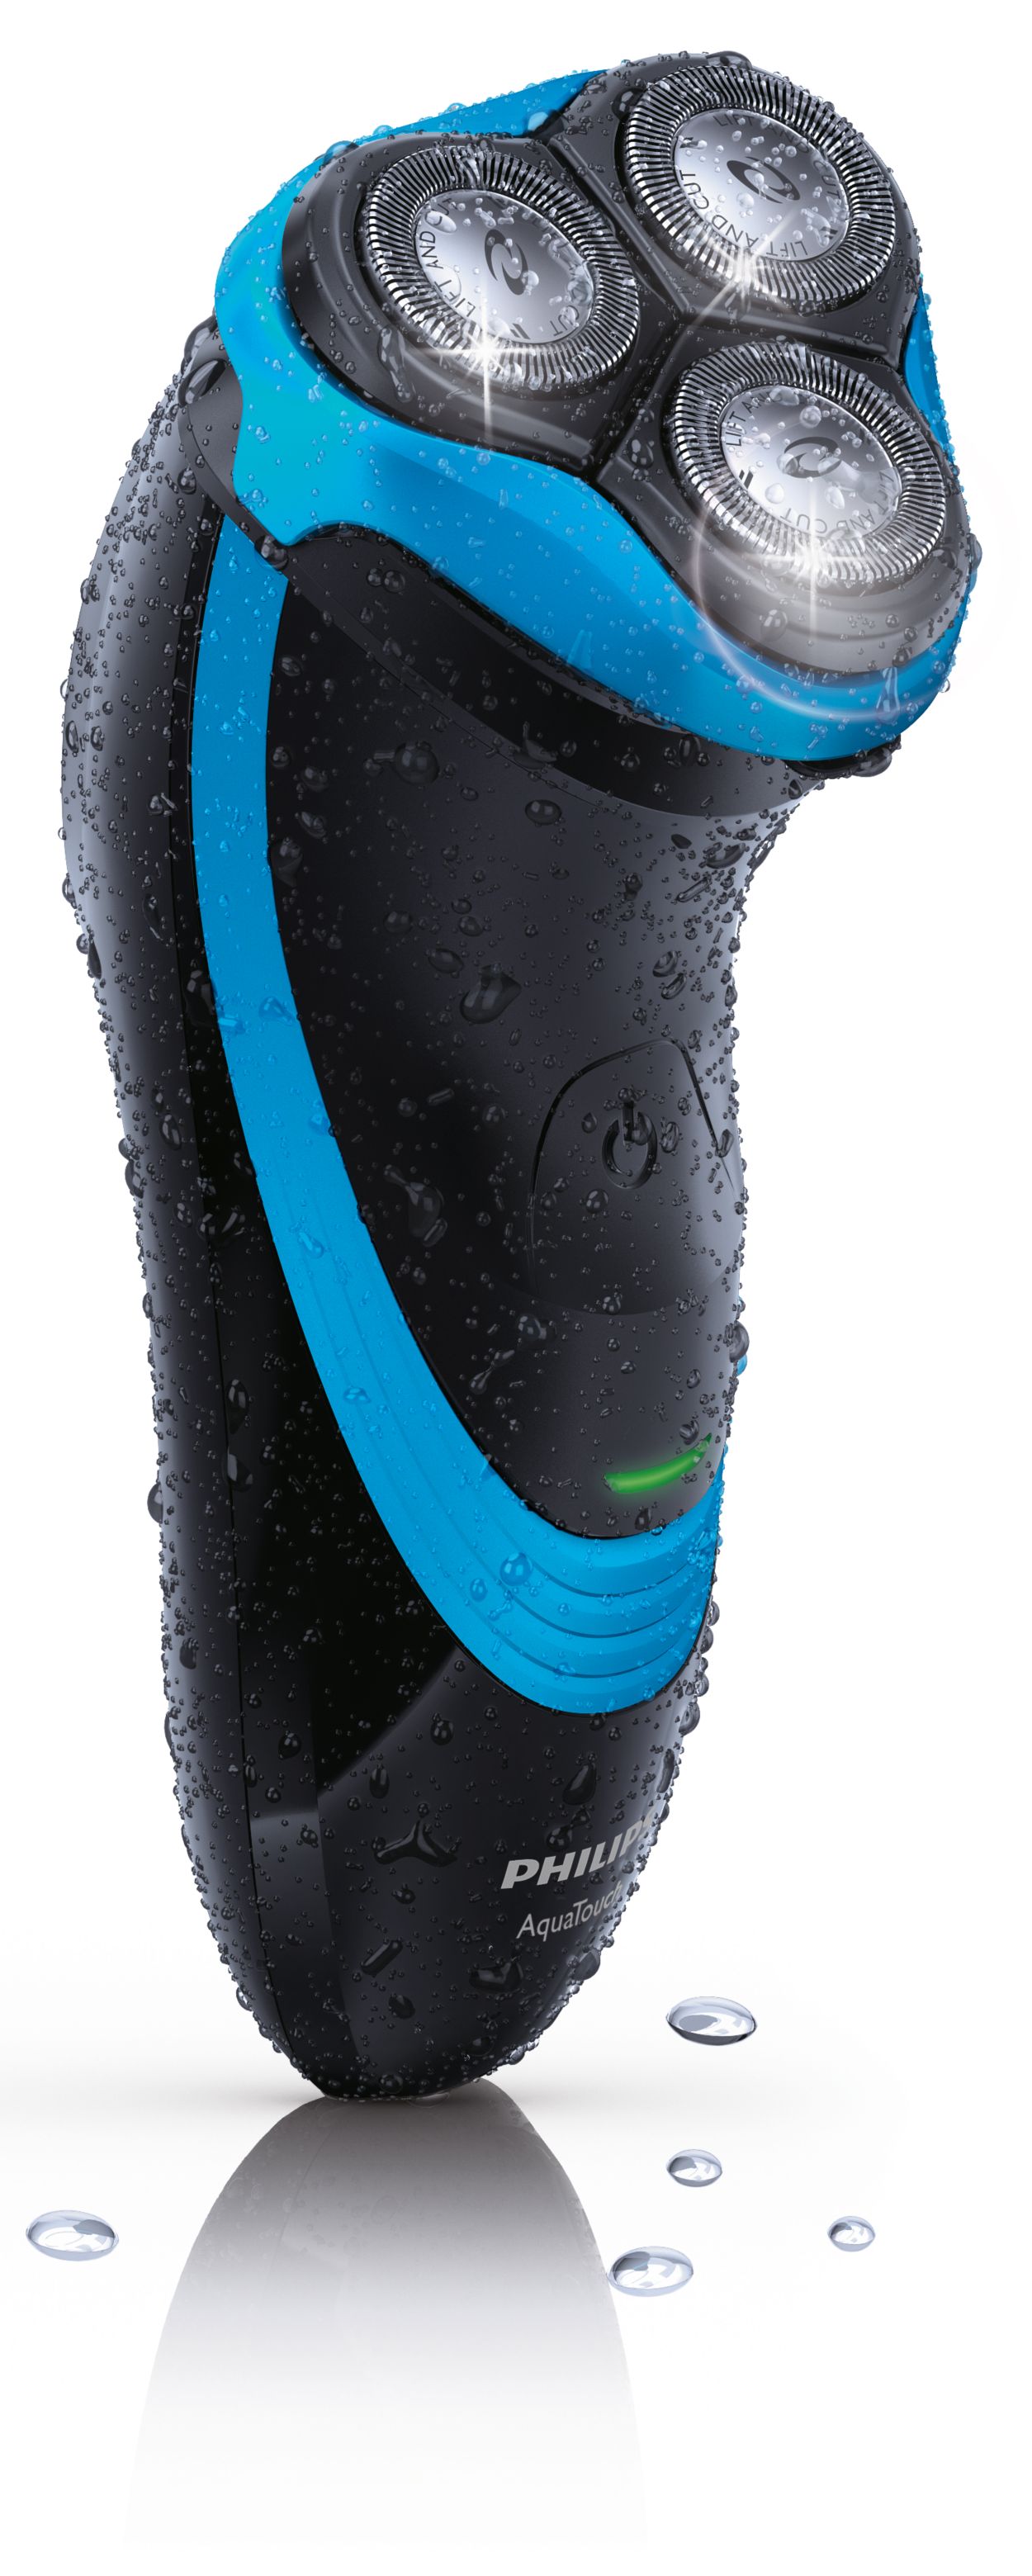 AquaTouch Våd elektrisk shaver AT750/20 | Philips